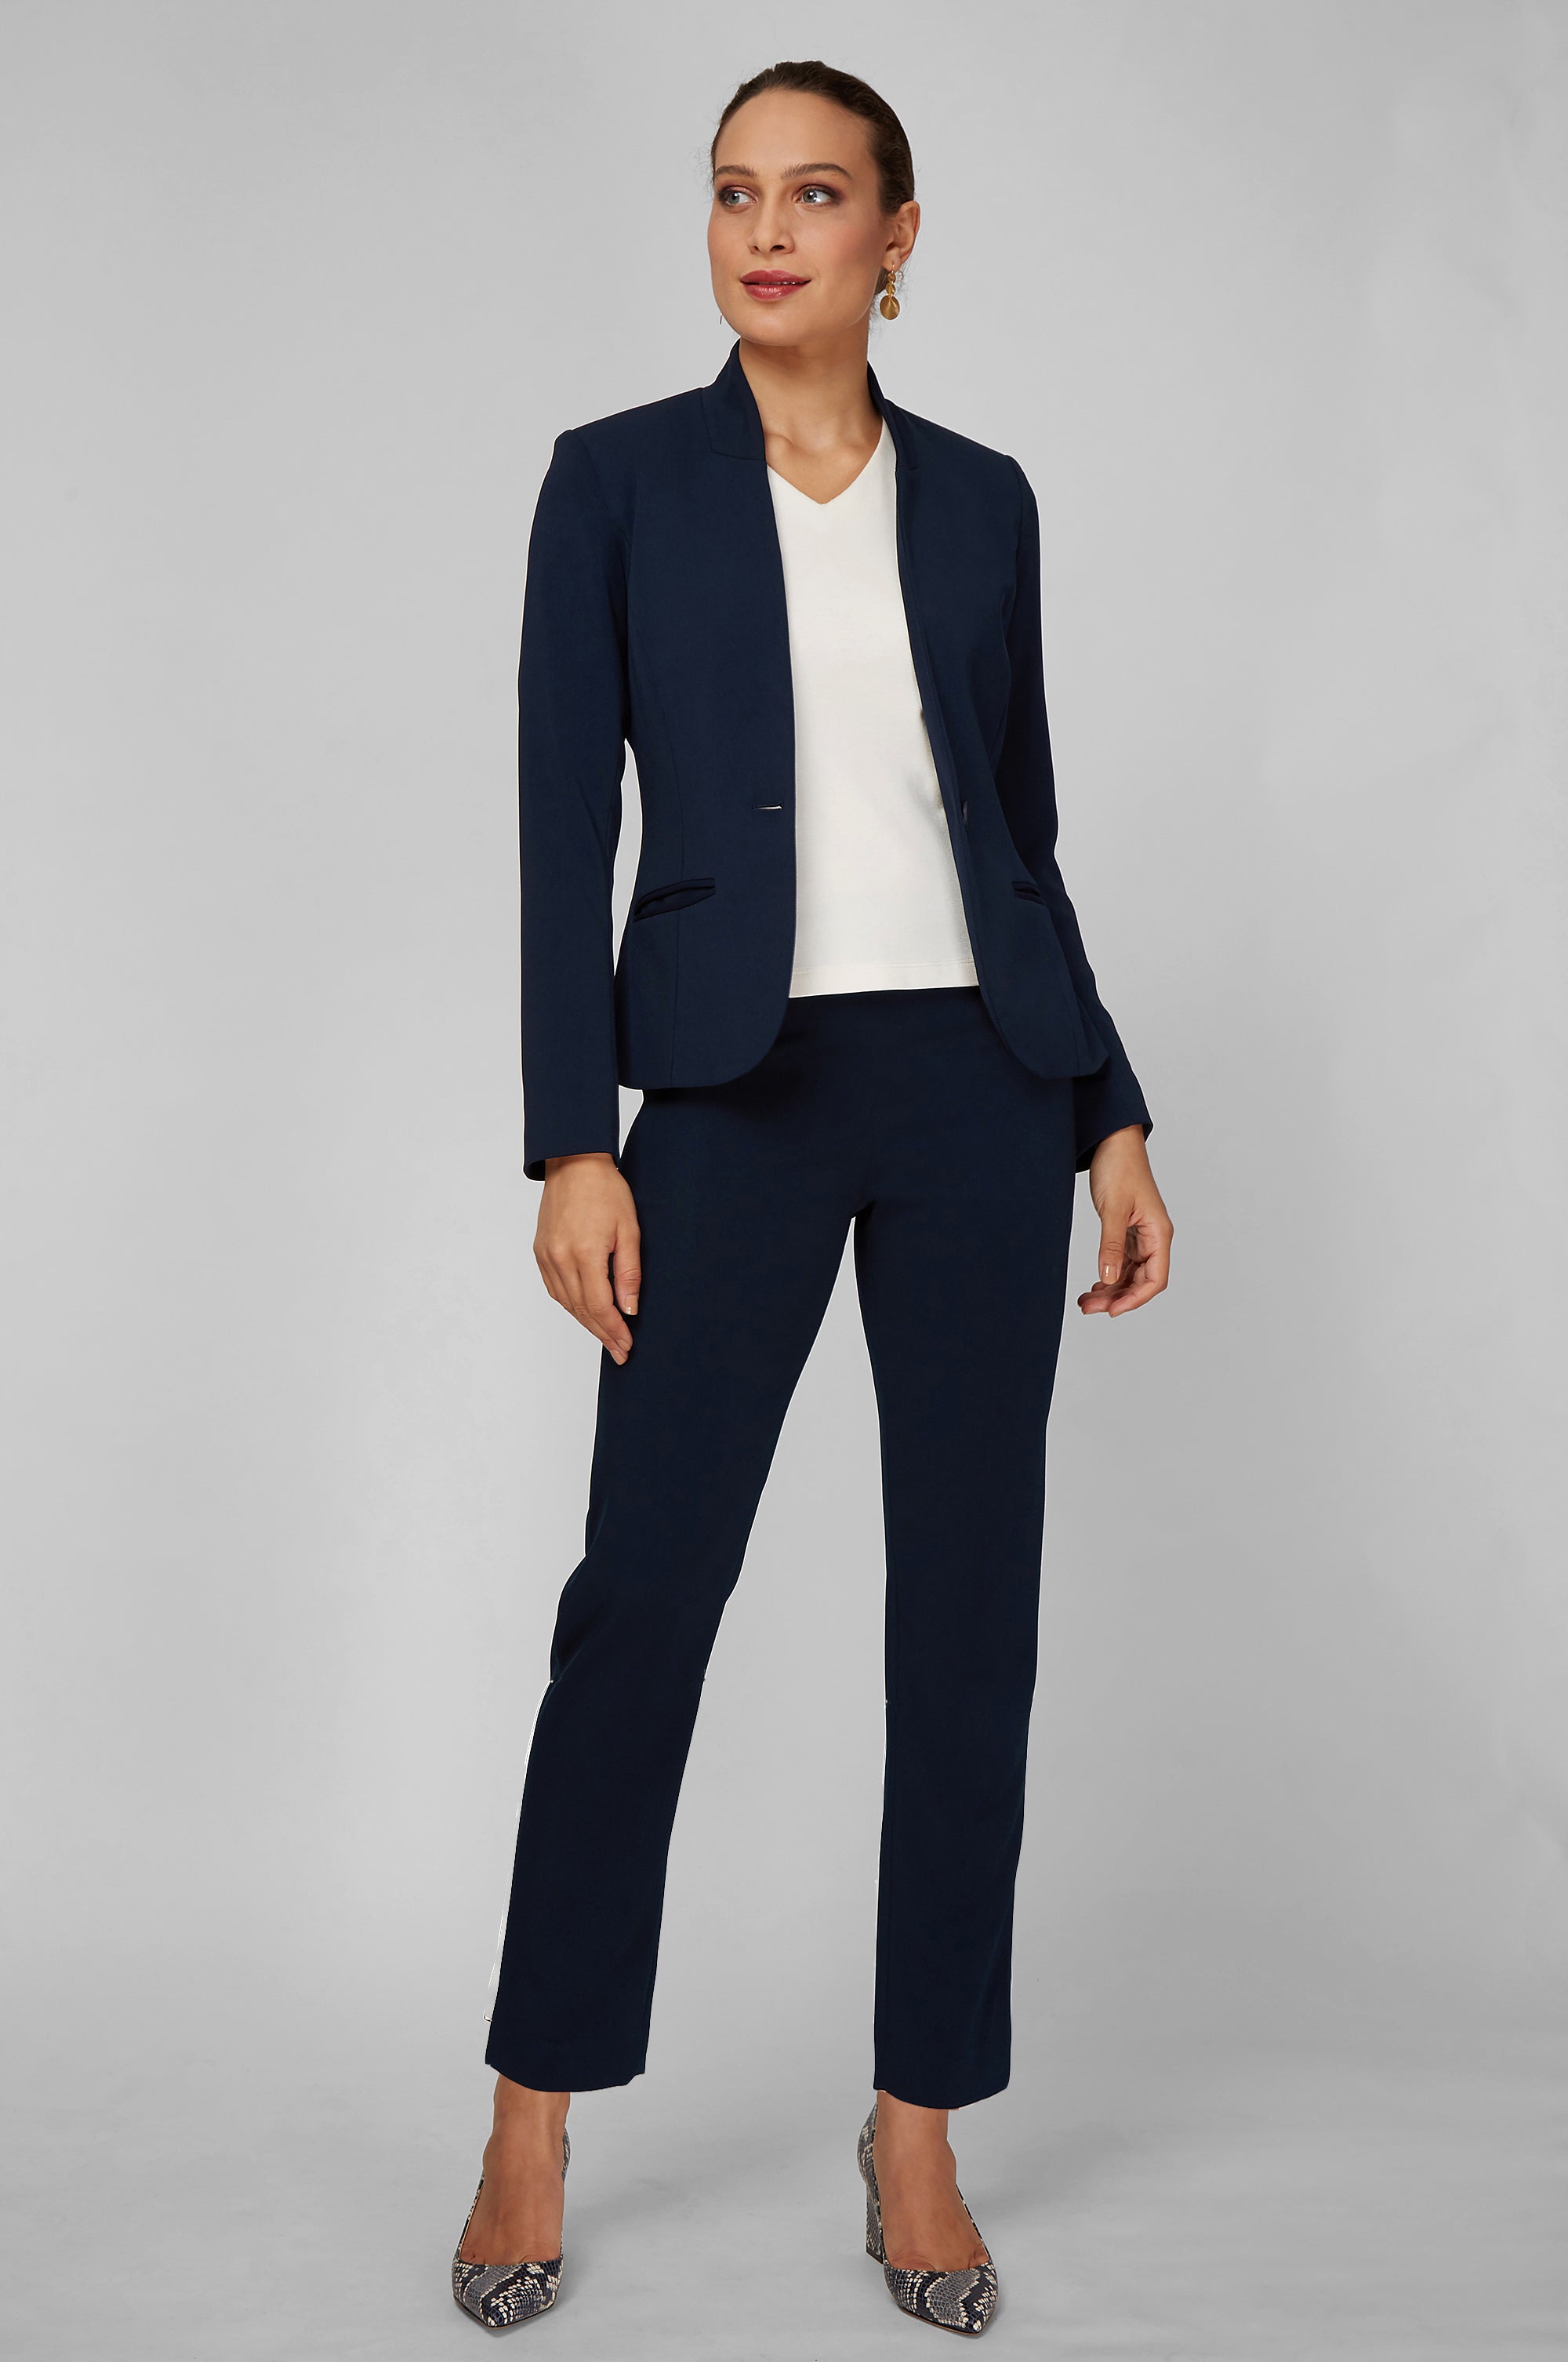 Workwear: Light Blue Pants and Black Blazer